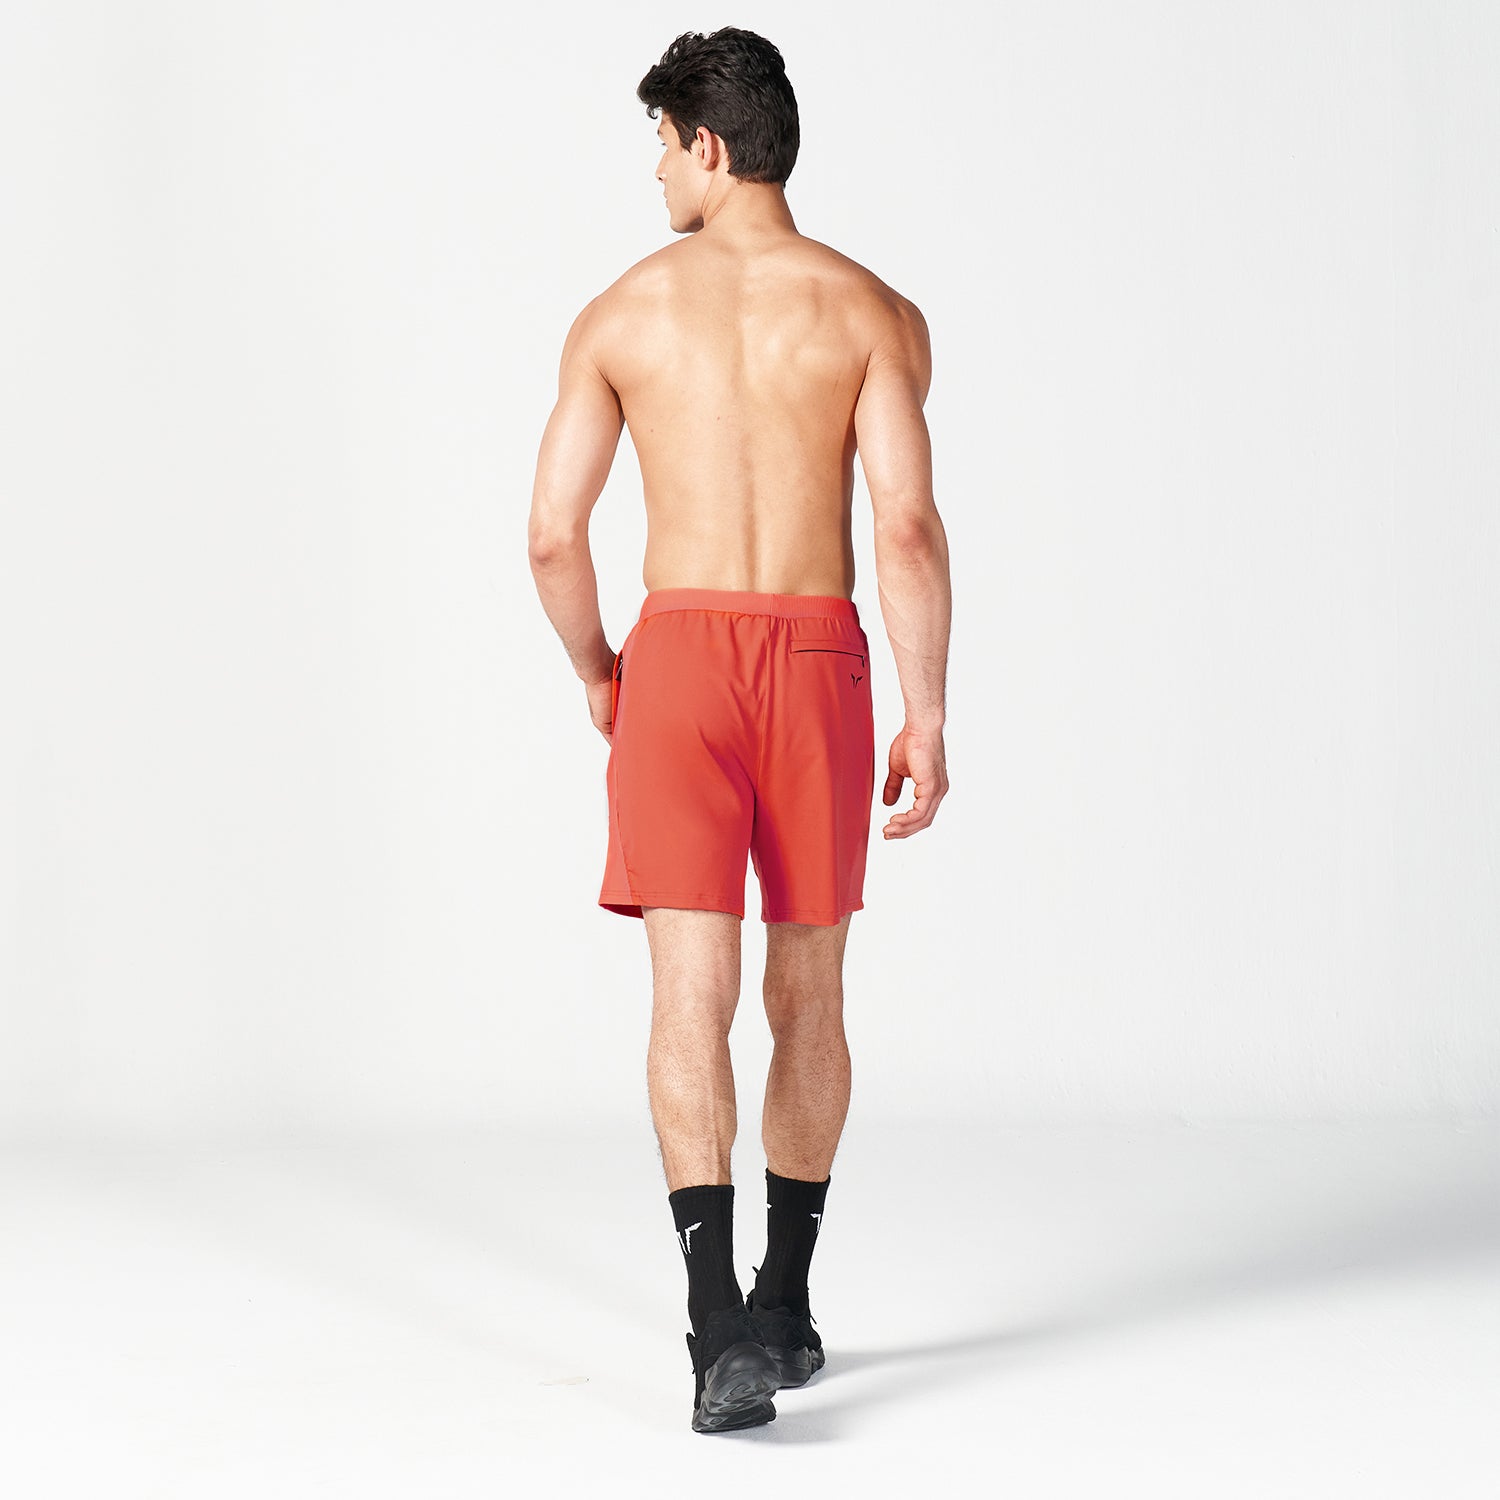 squatwolf-gym-wear-ribbed-flex-shorts-orange-workout-short-for-men